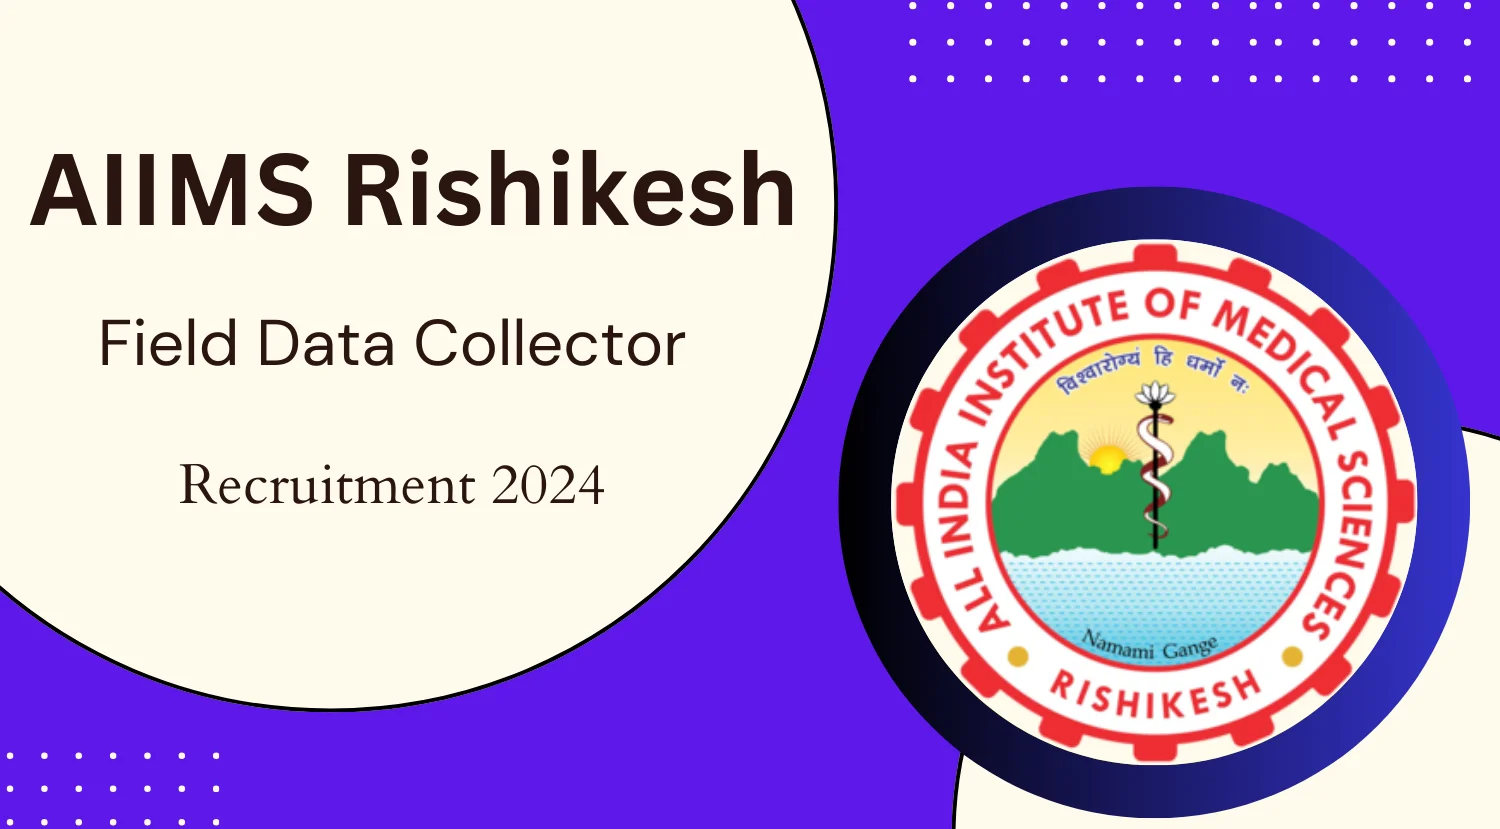 AIIMS Rishikesh Recruitment 2024 for Field Data Collector Post